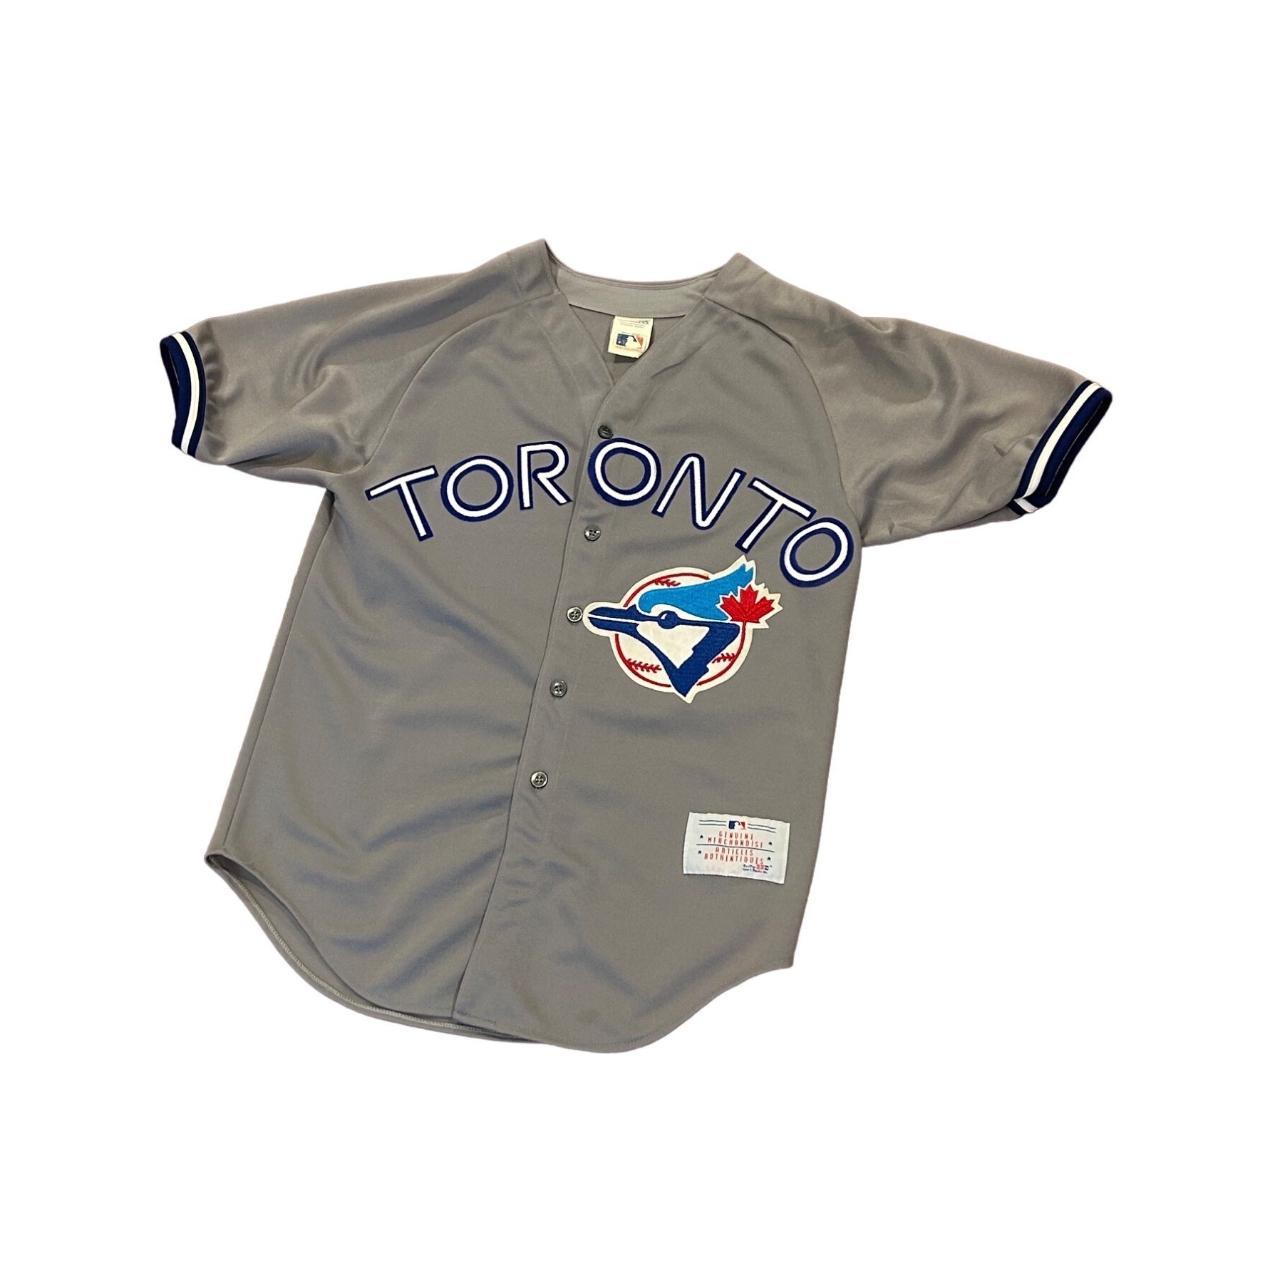 Toronto Blue Jays Dresses for Sale